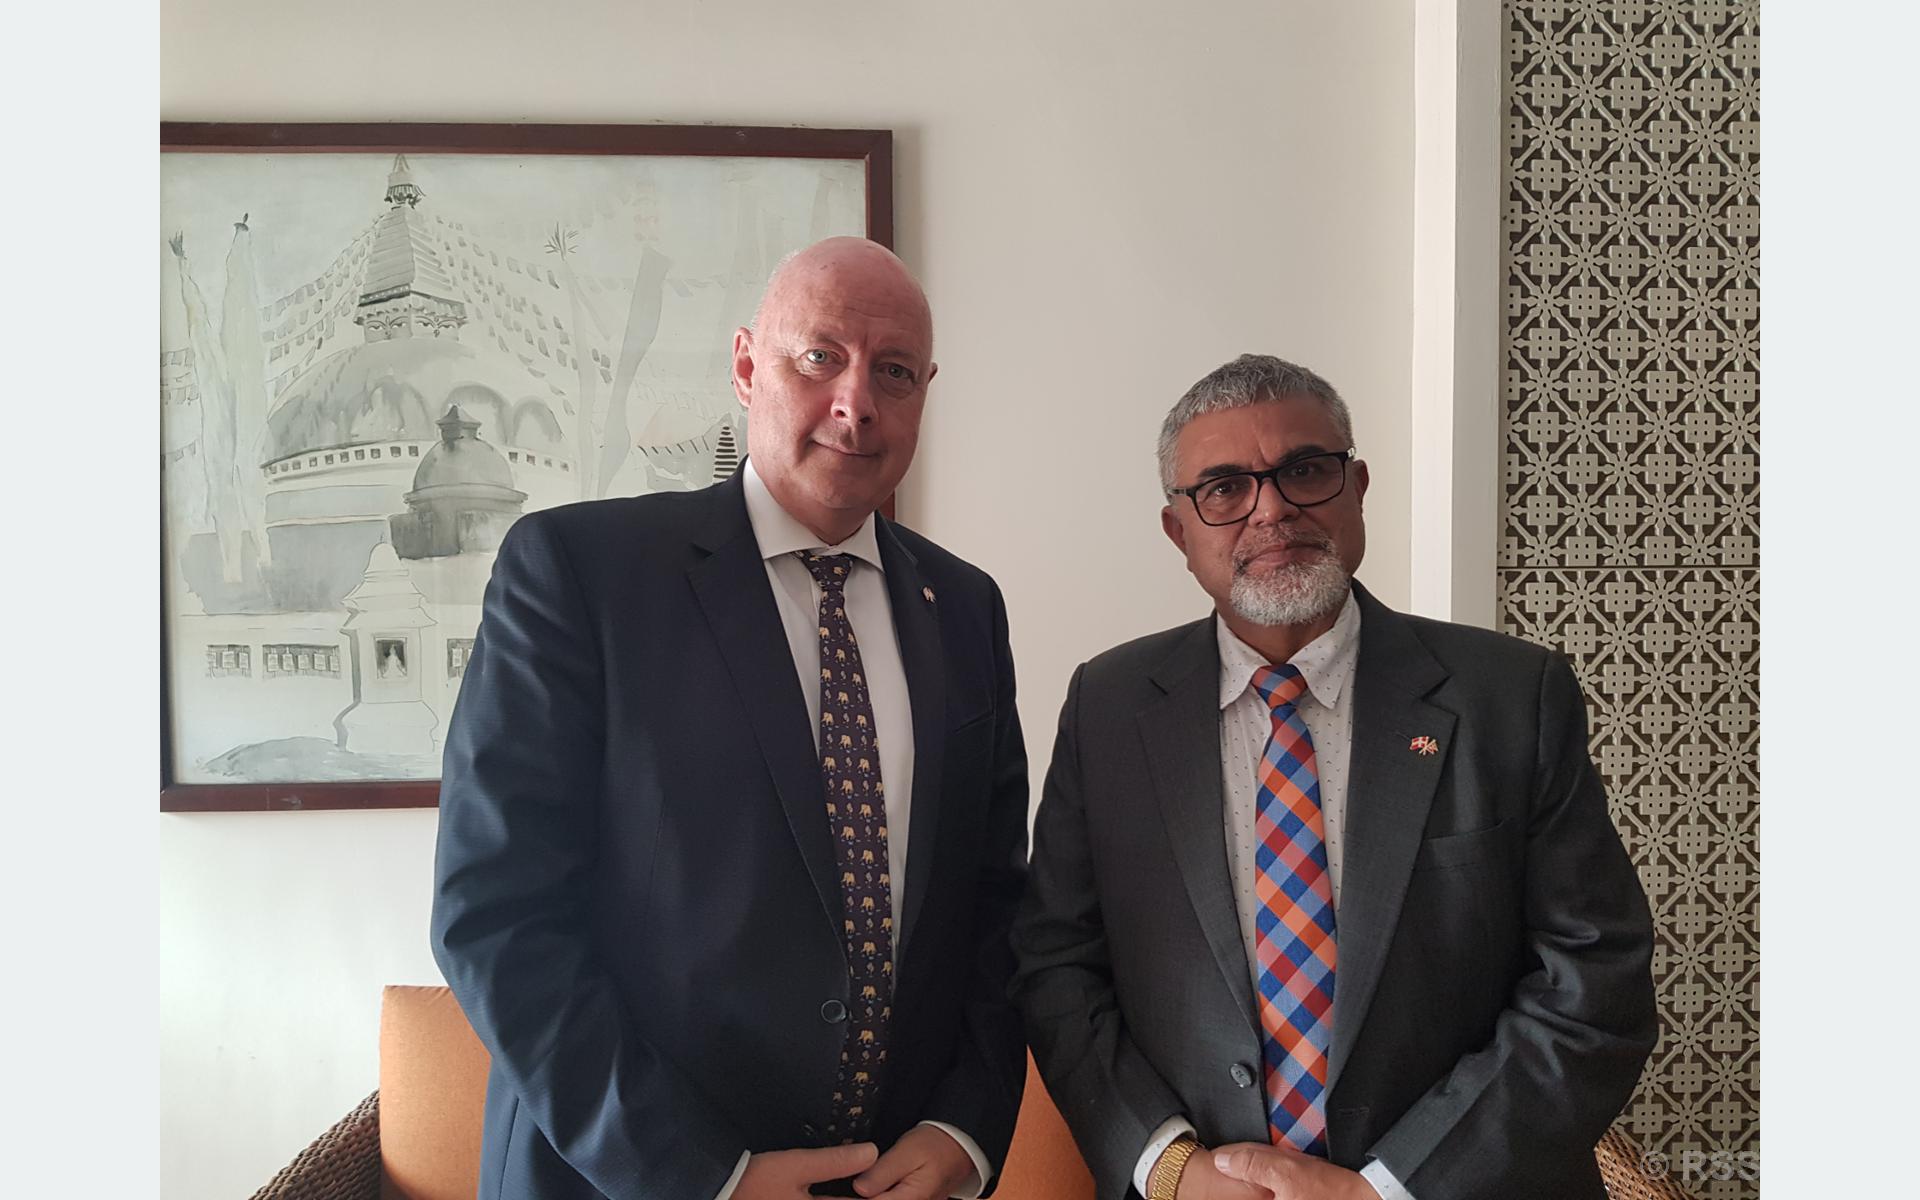 Denmark-Nepal ties to be further harmonized via tourism: Ambassador Svane